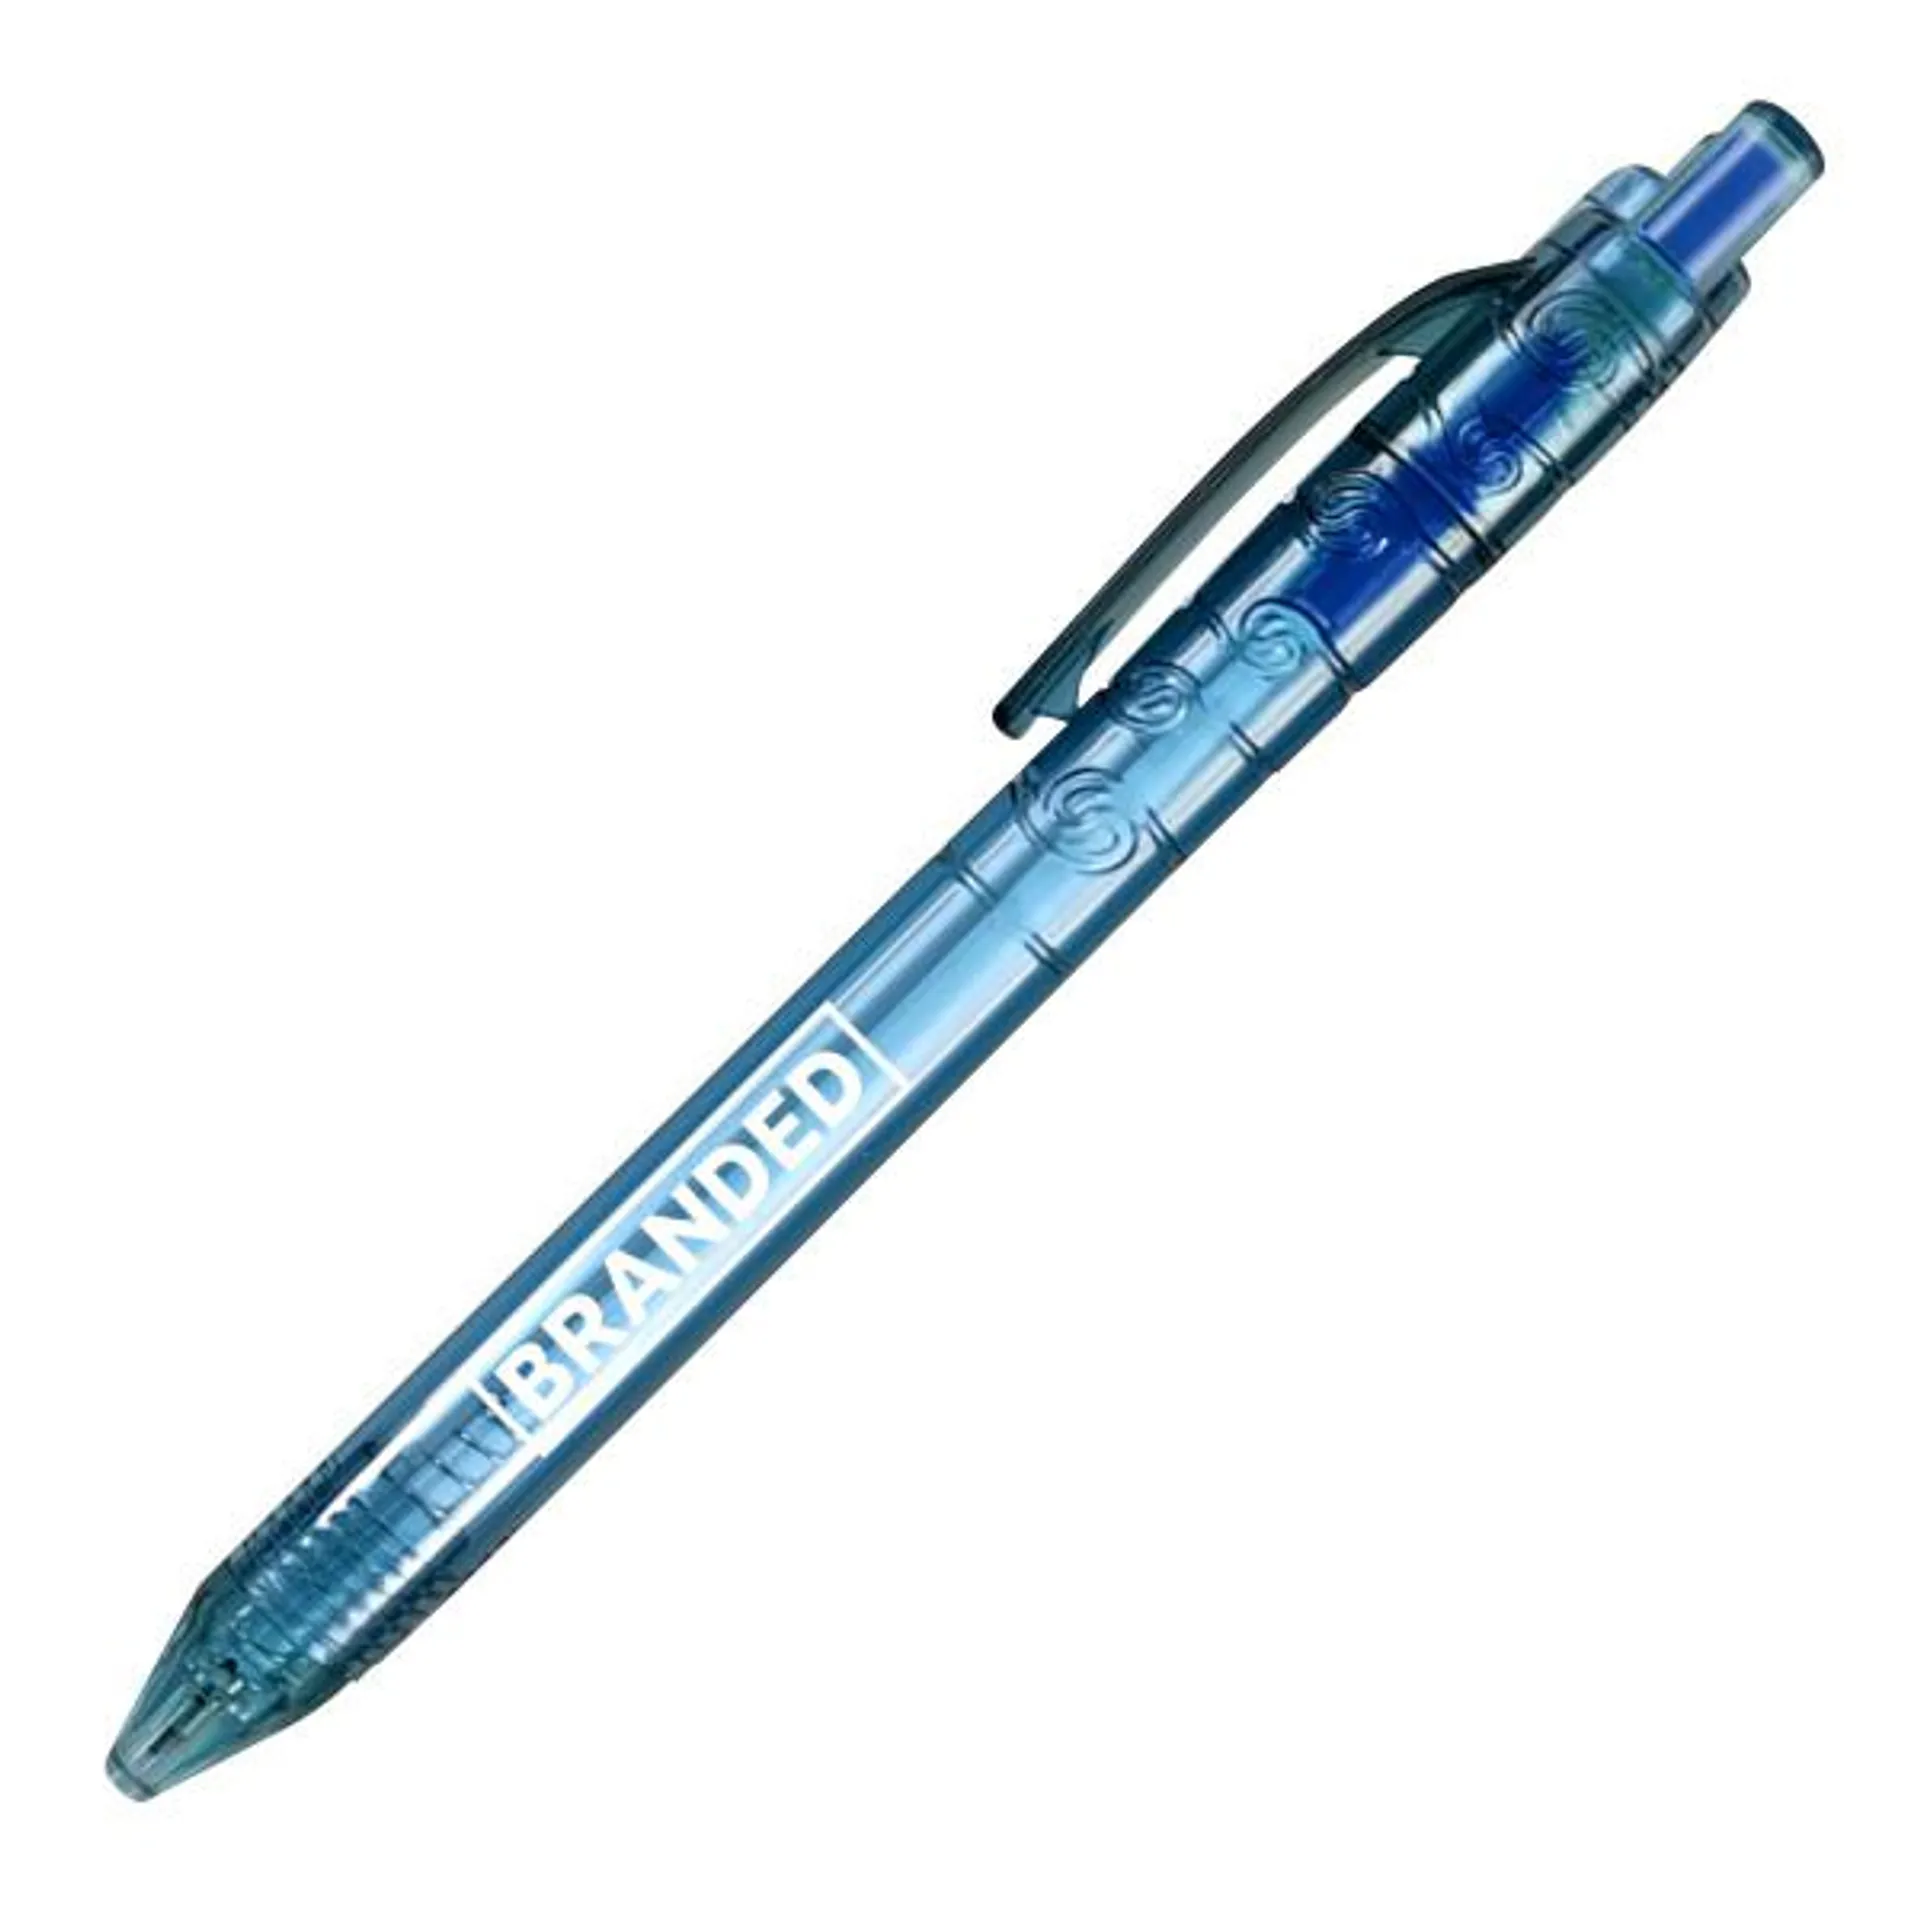 rPet Oasis Pen